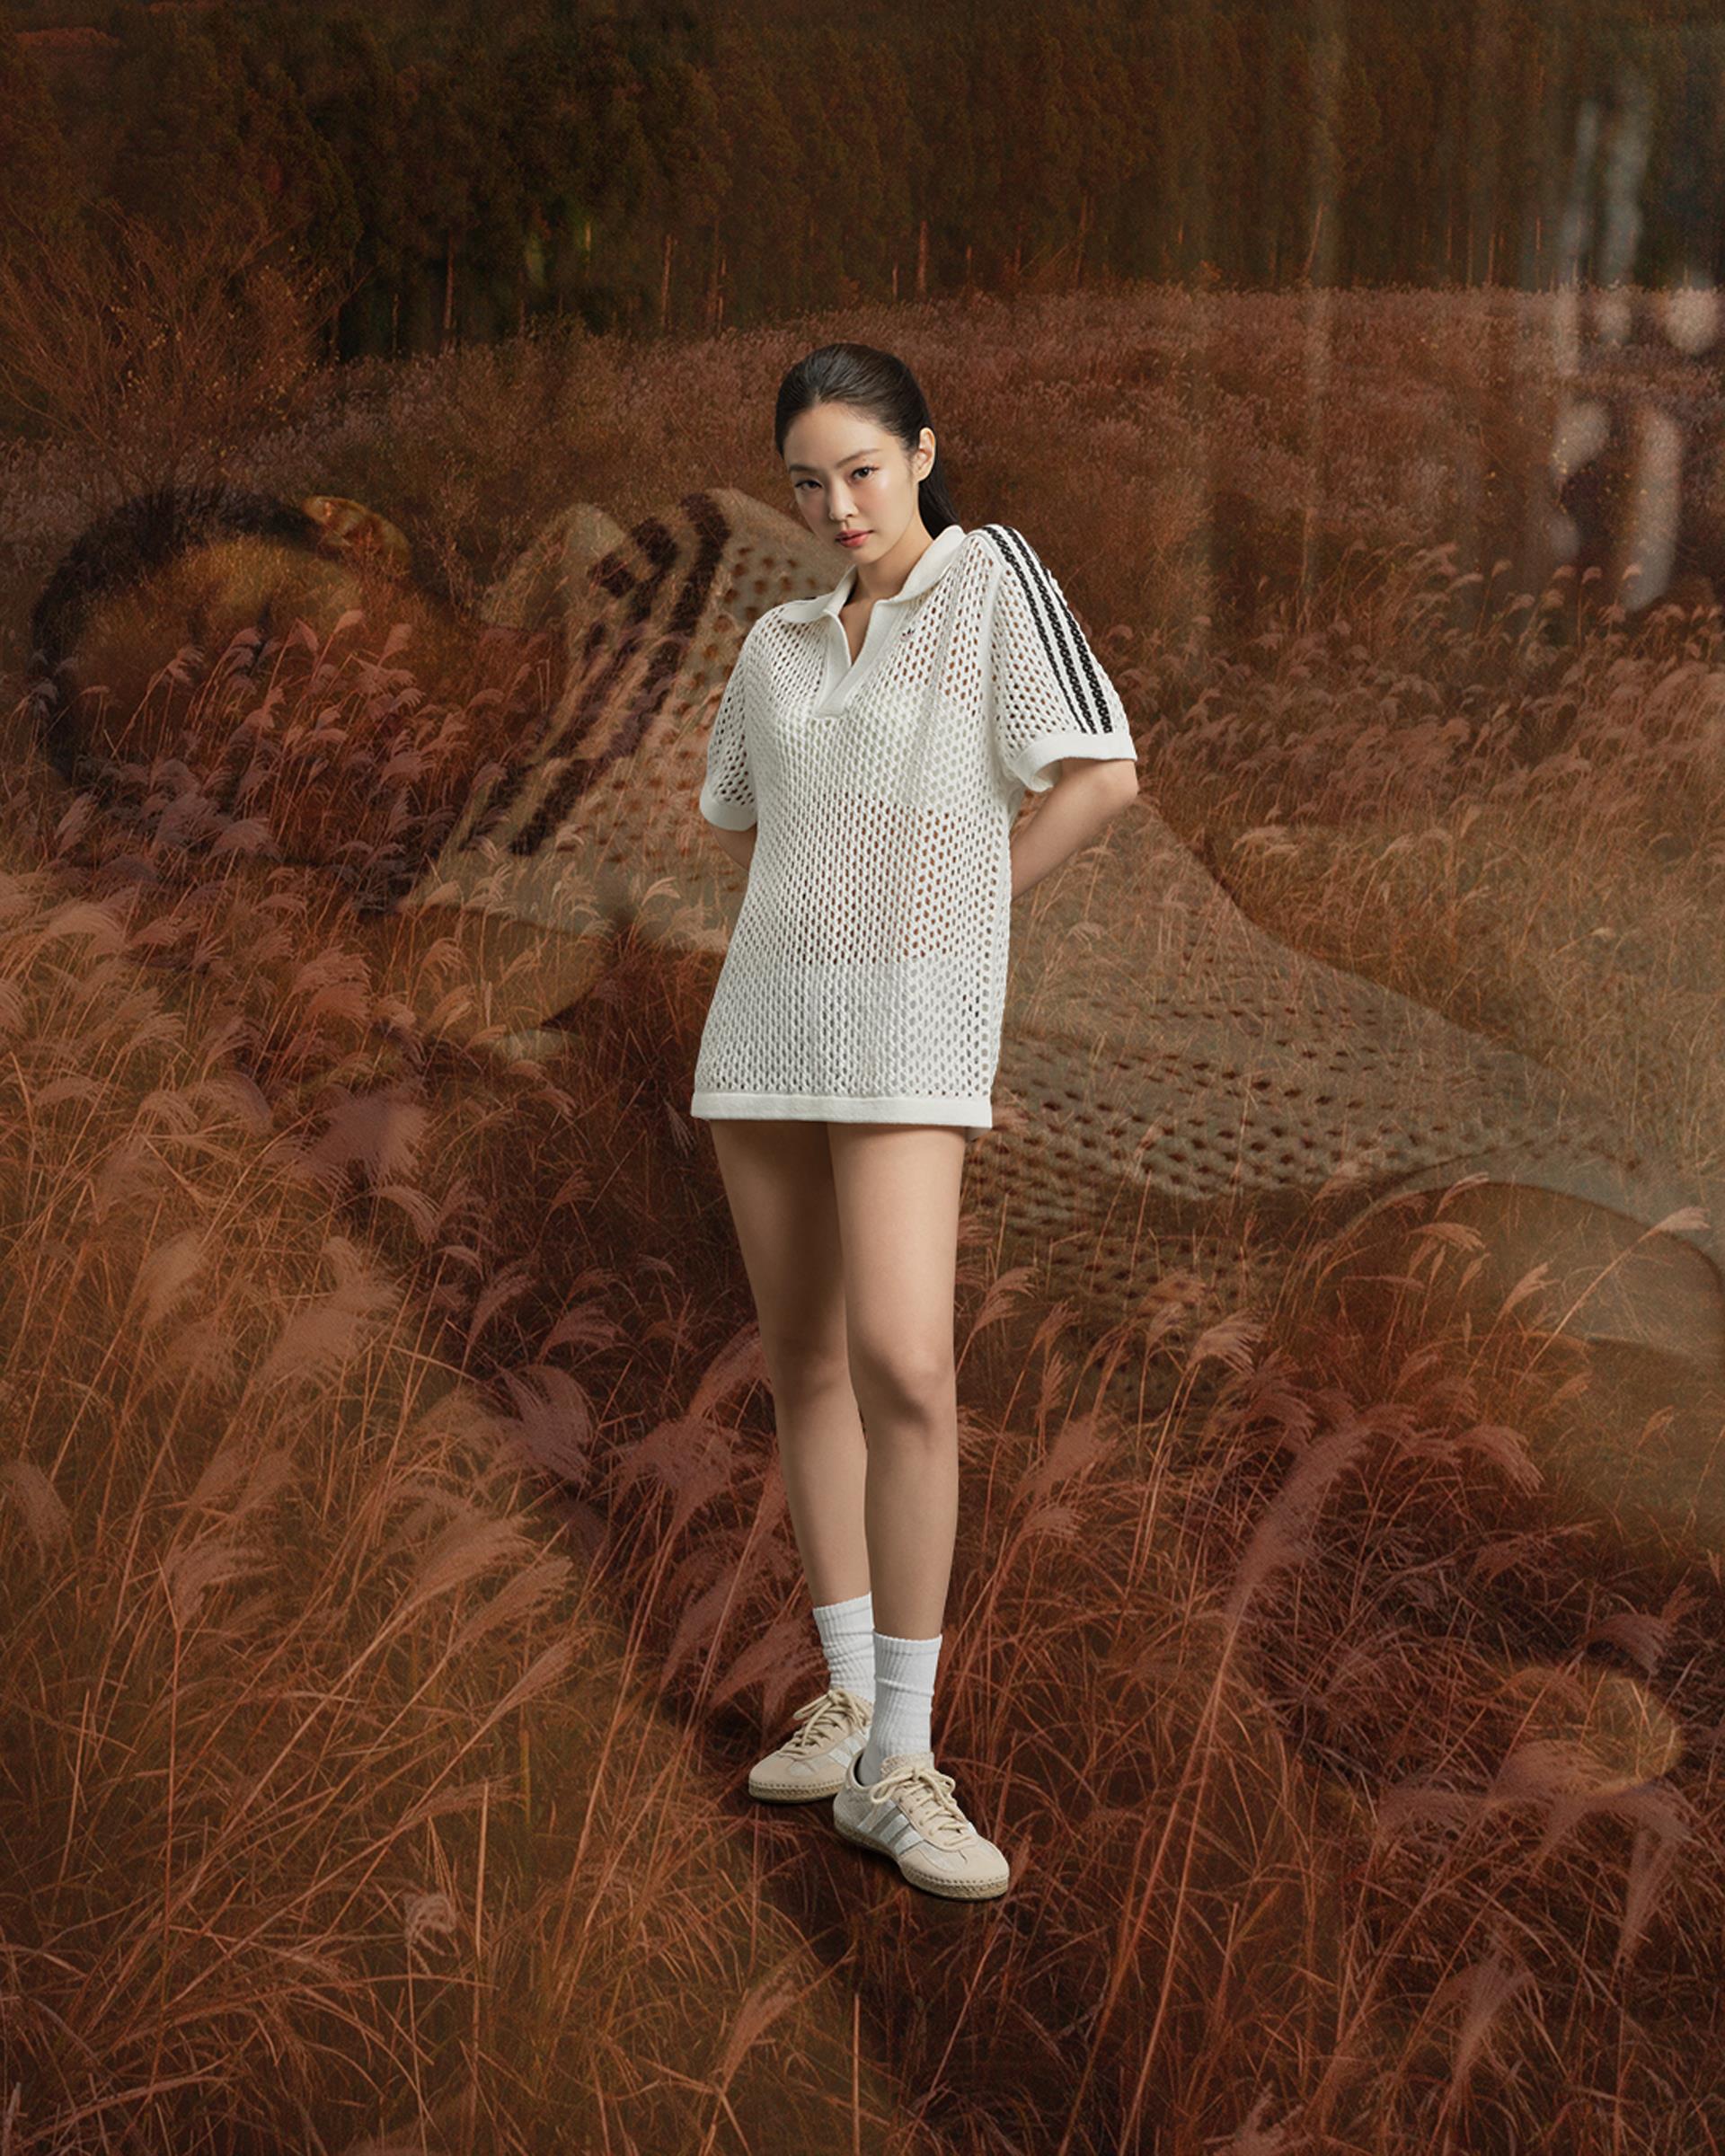 Adidas Originals Edison Chen’s CLOT Gazelle